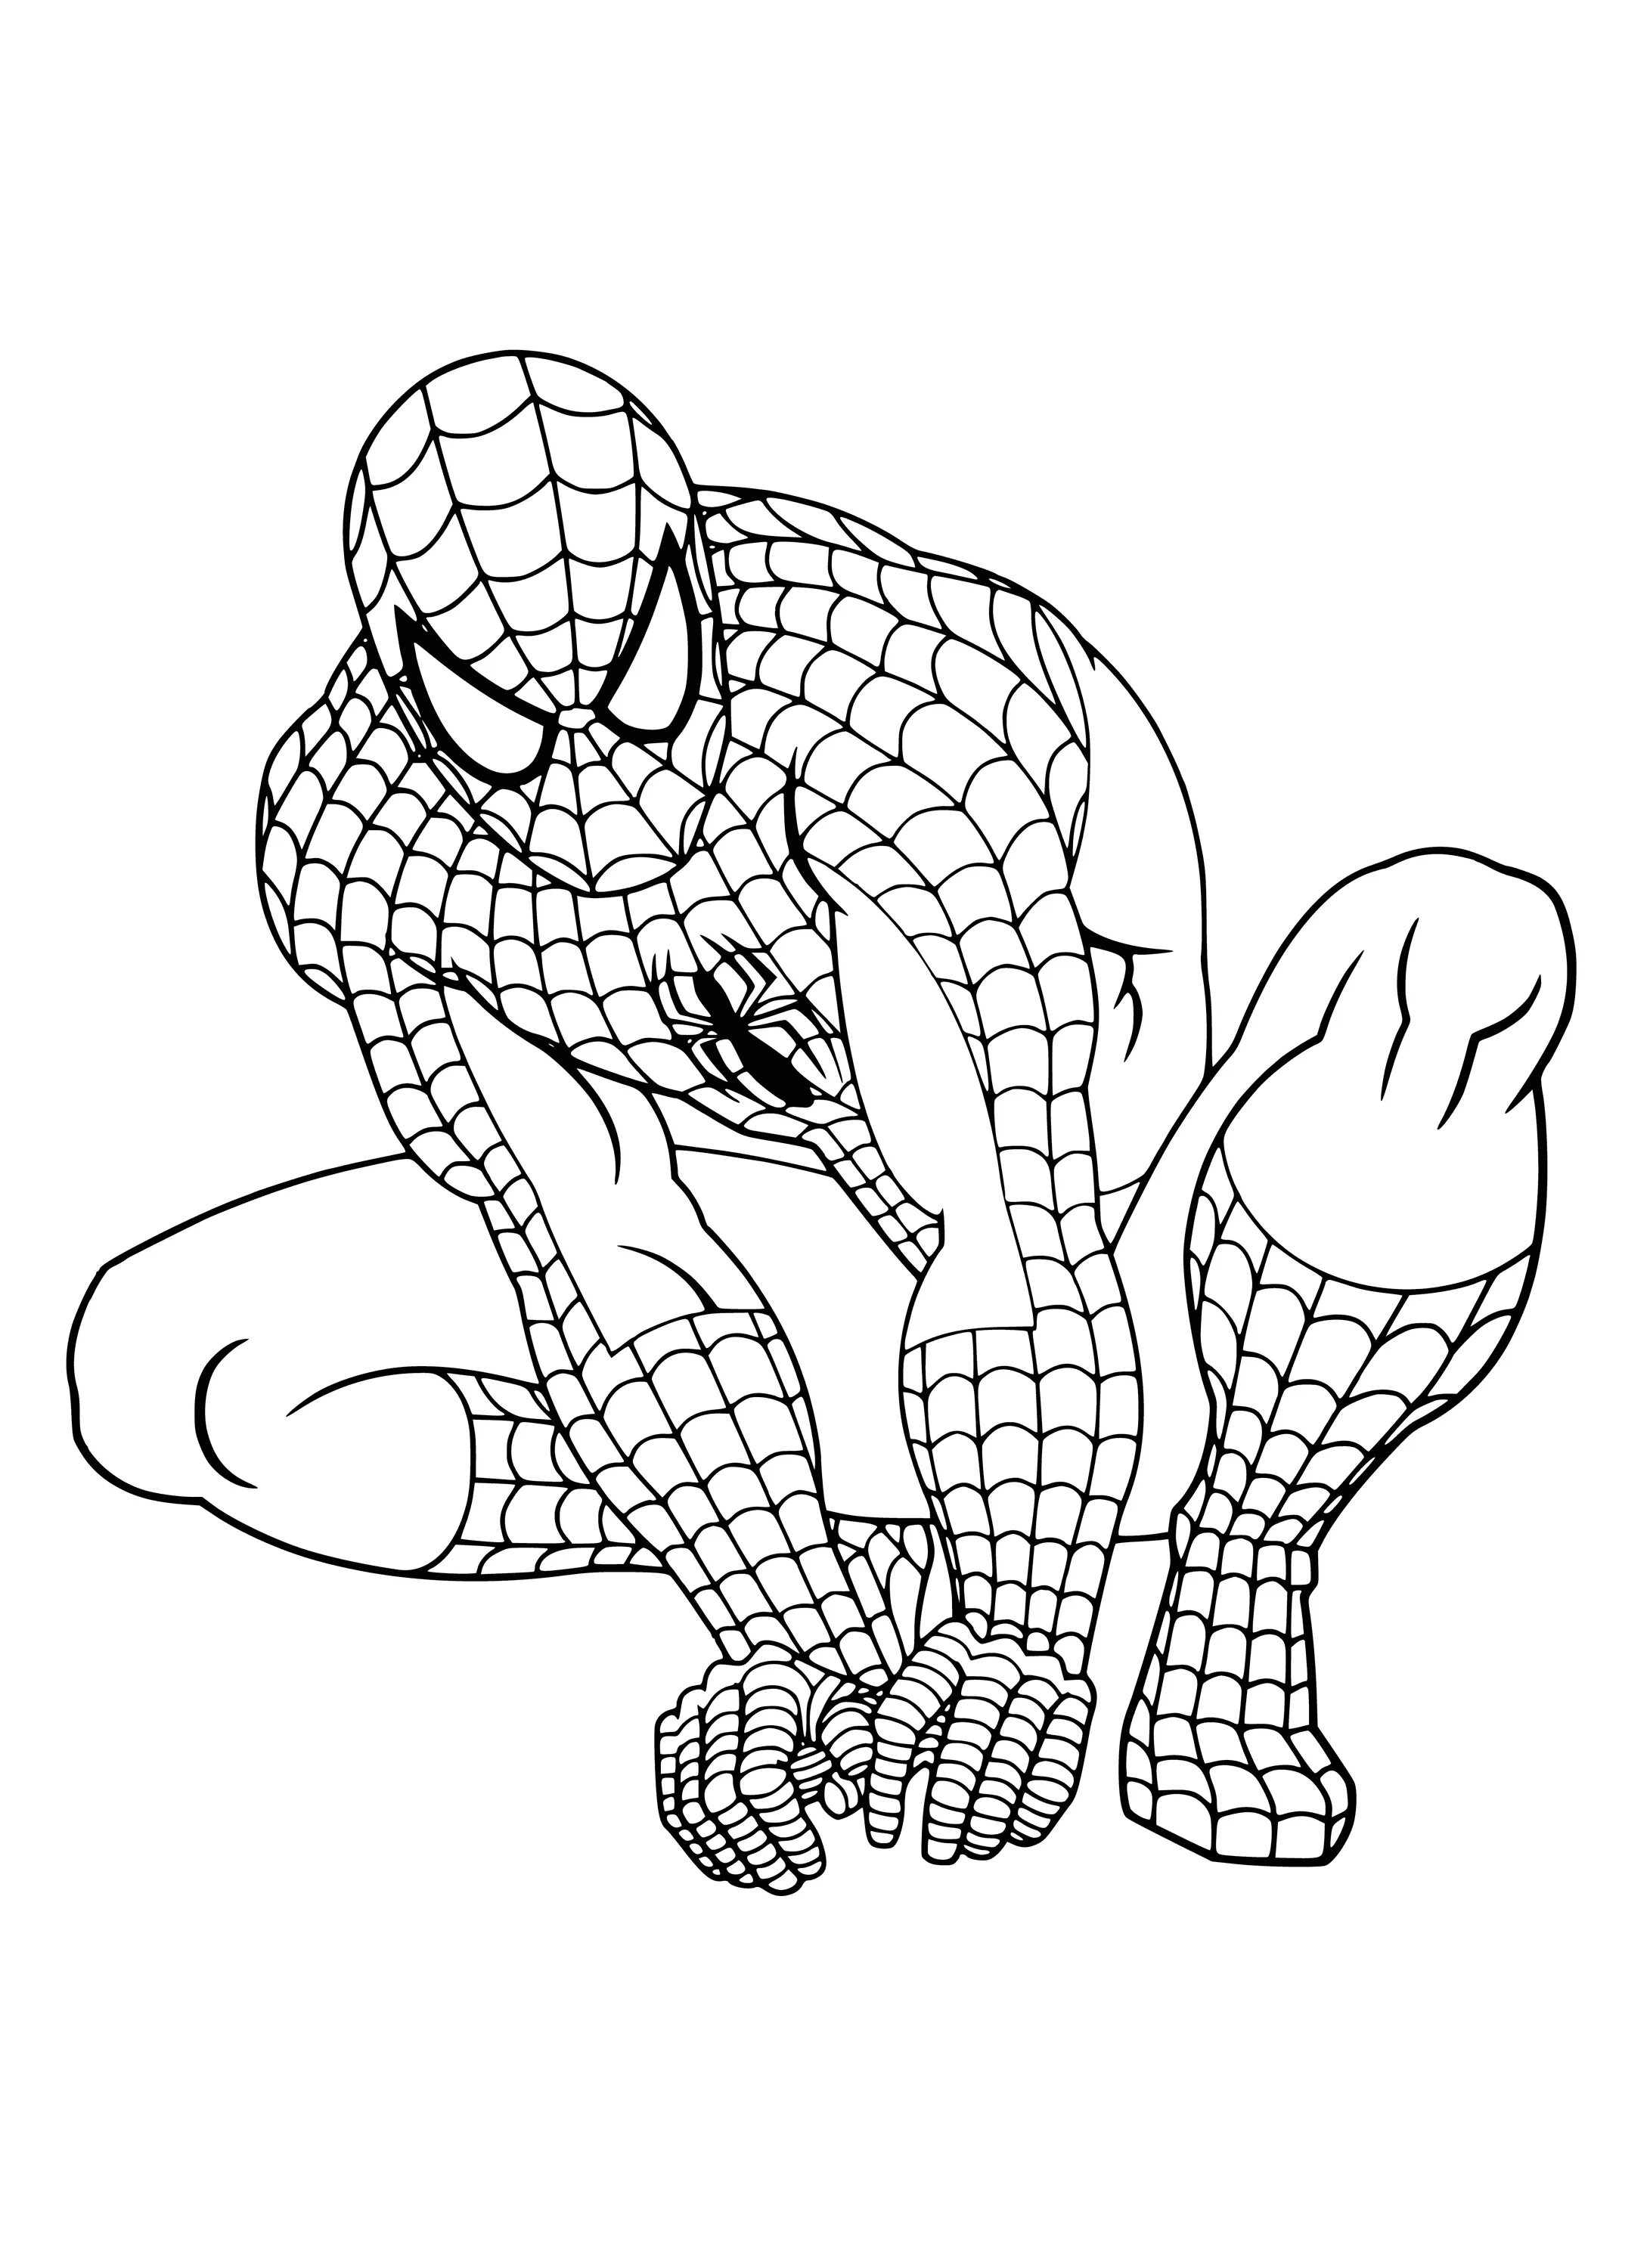 Spiderman format #4